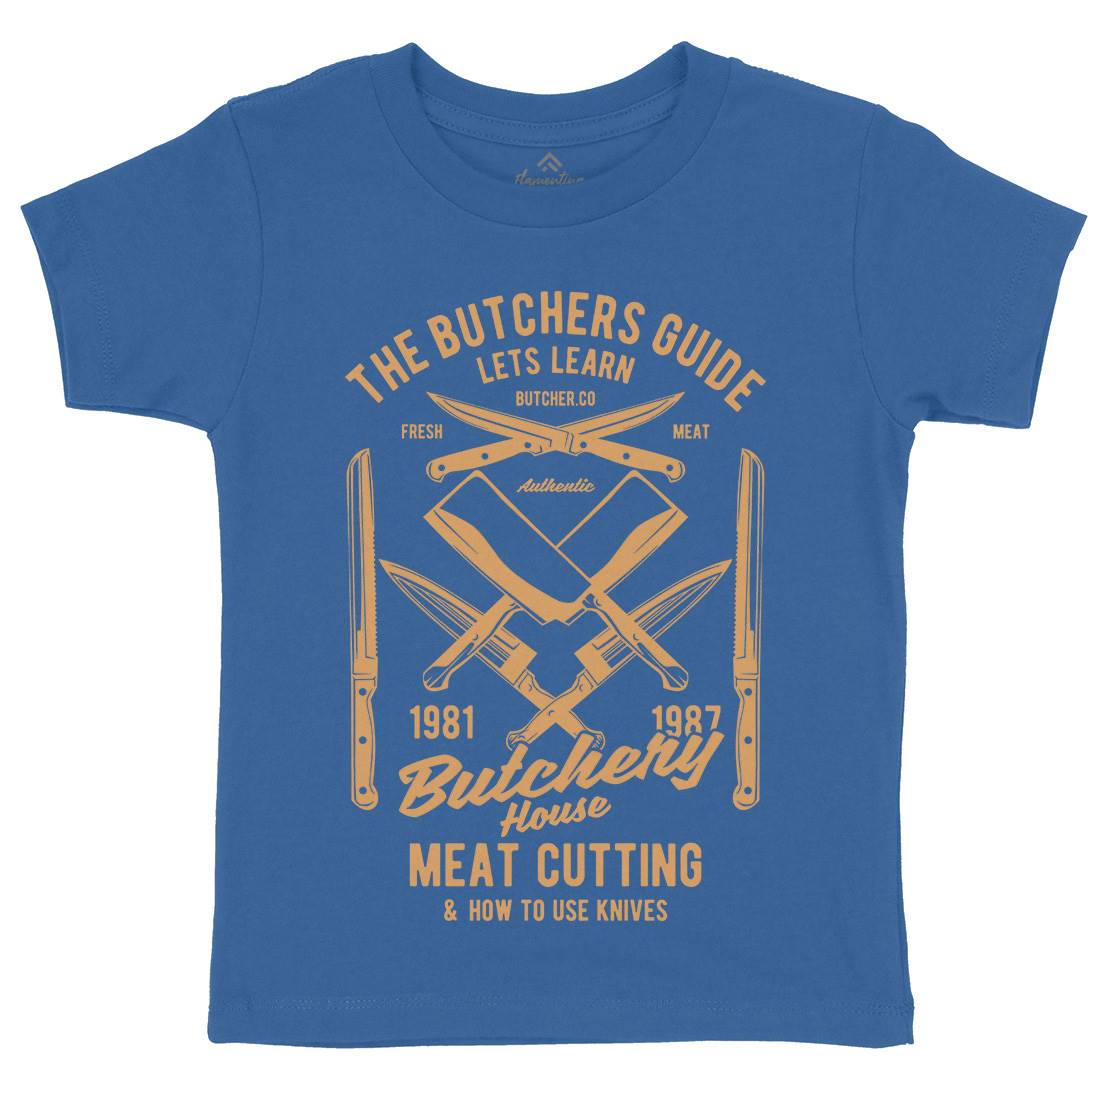 Butchery House Kids Crew Neck T-Shirt Retro B190